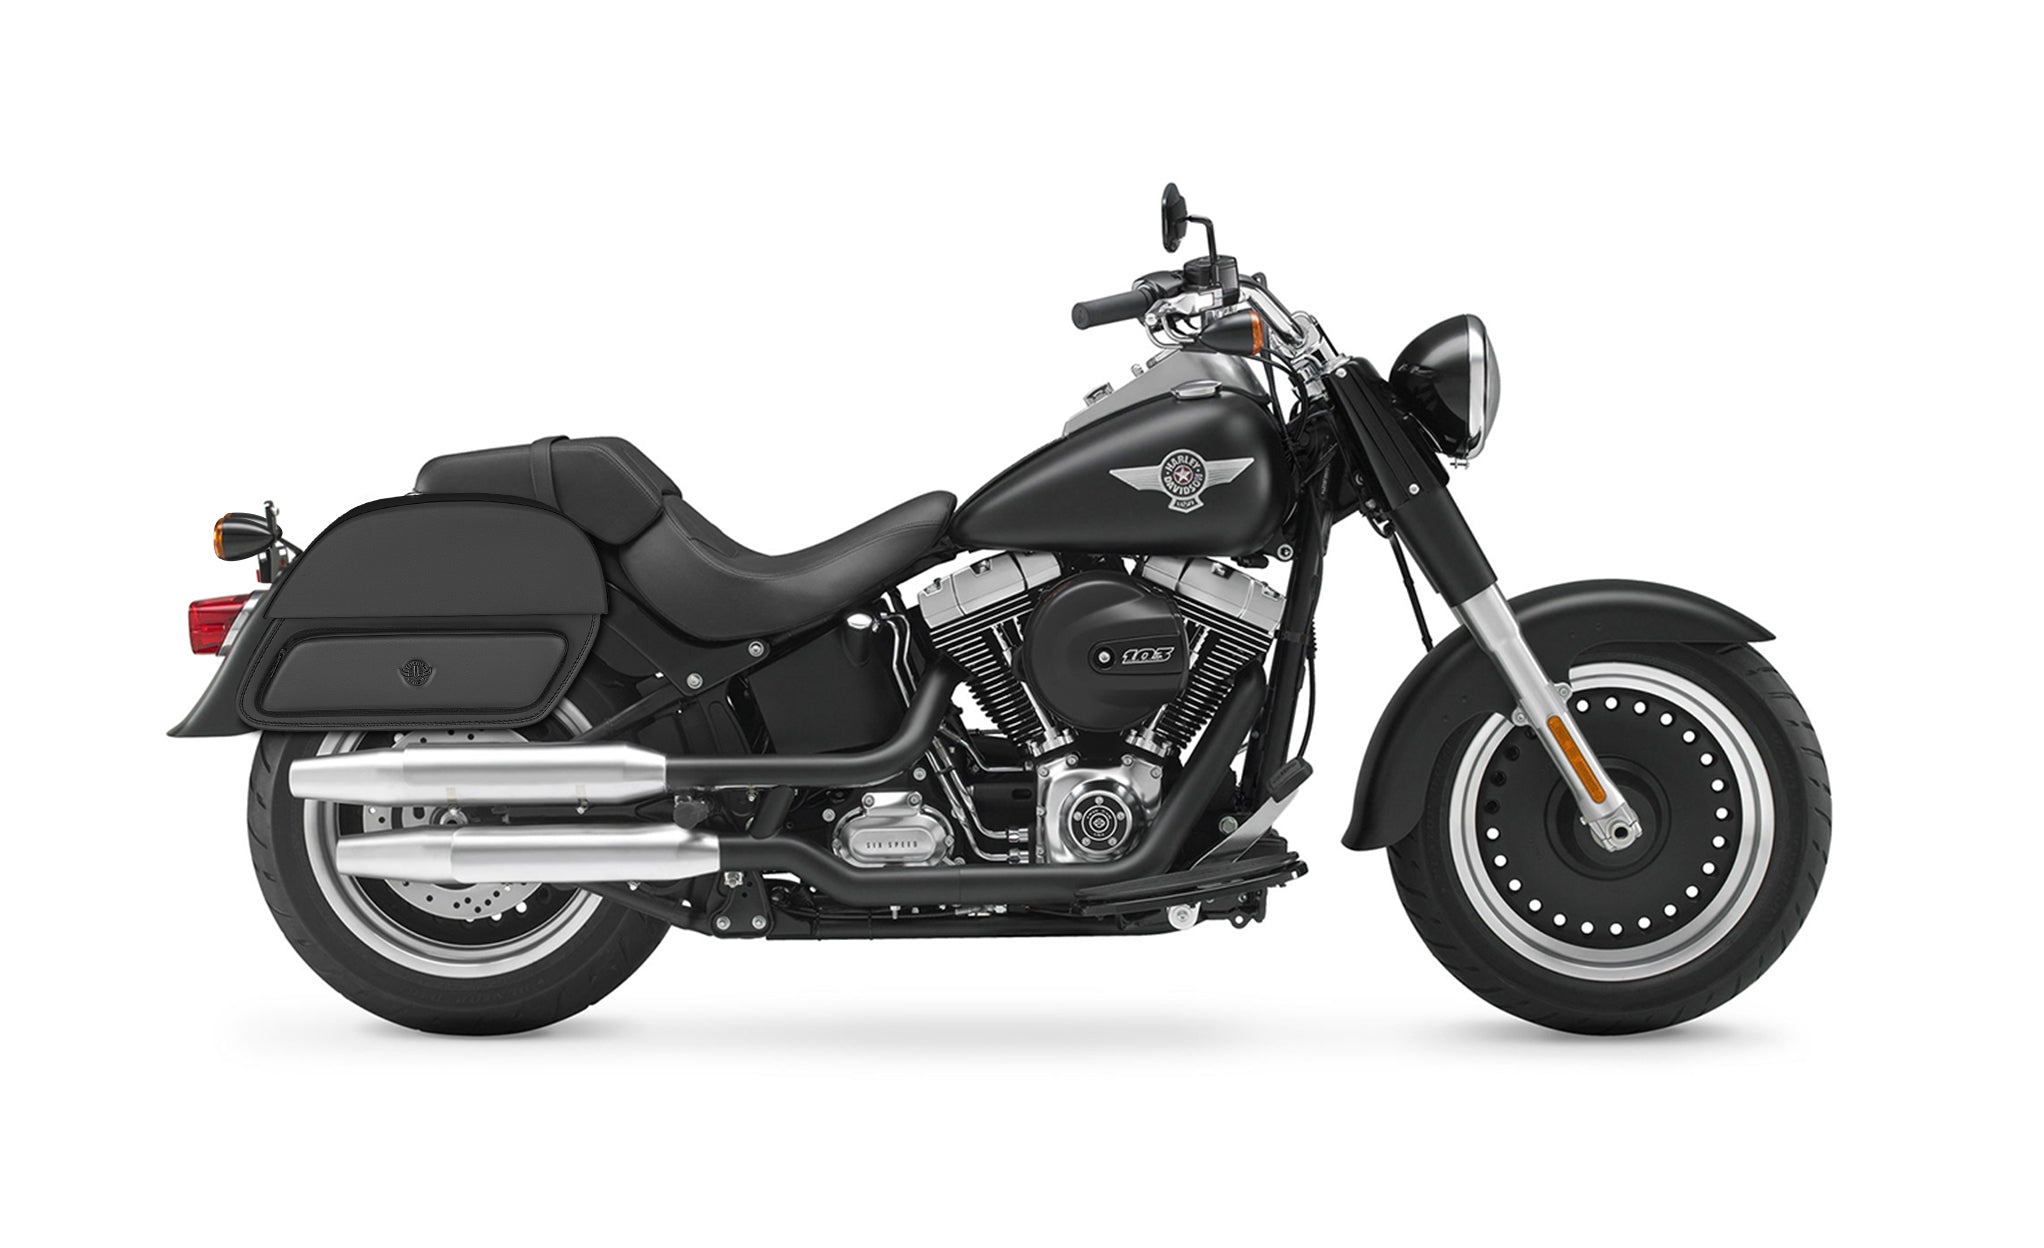 28L - Pantheon Medium Motorcycle Saddlebags for Harley Softail Fat Boy Lo FLSTFB on Bike Photo @expand